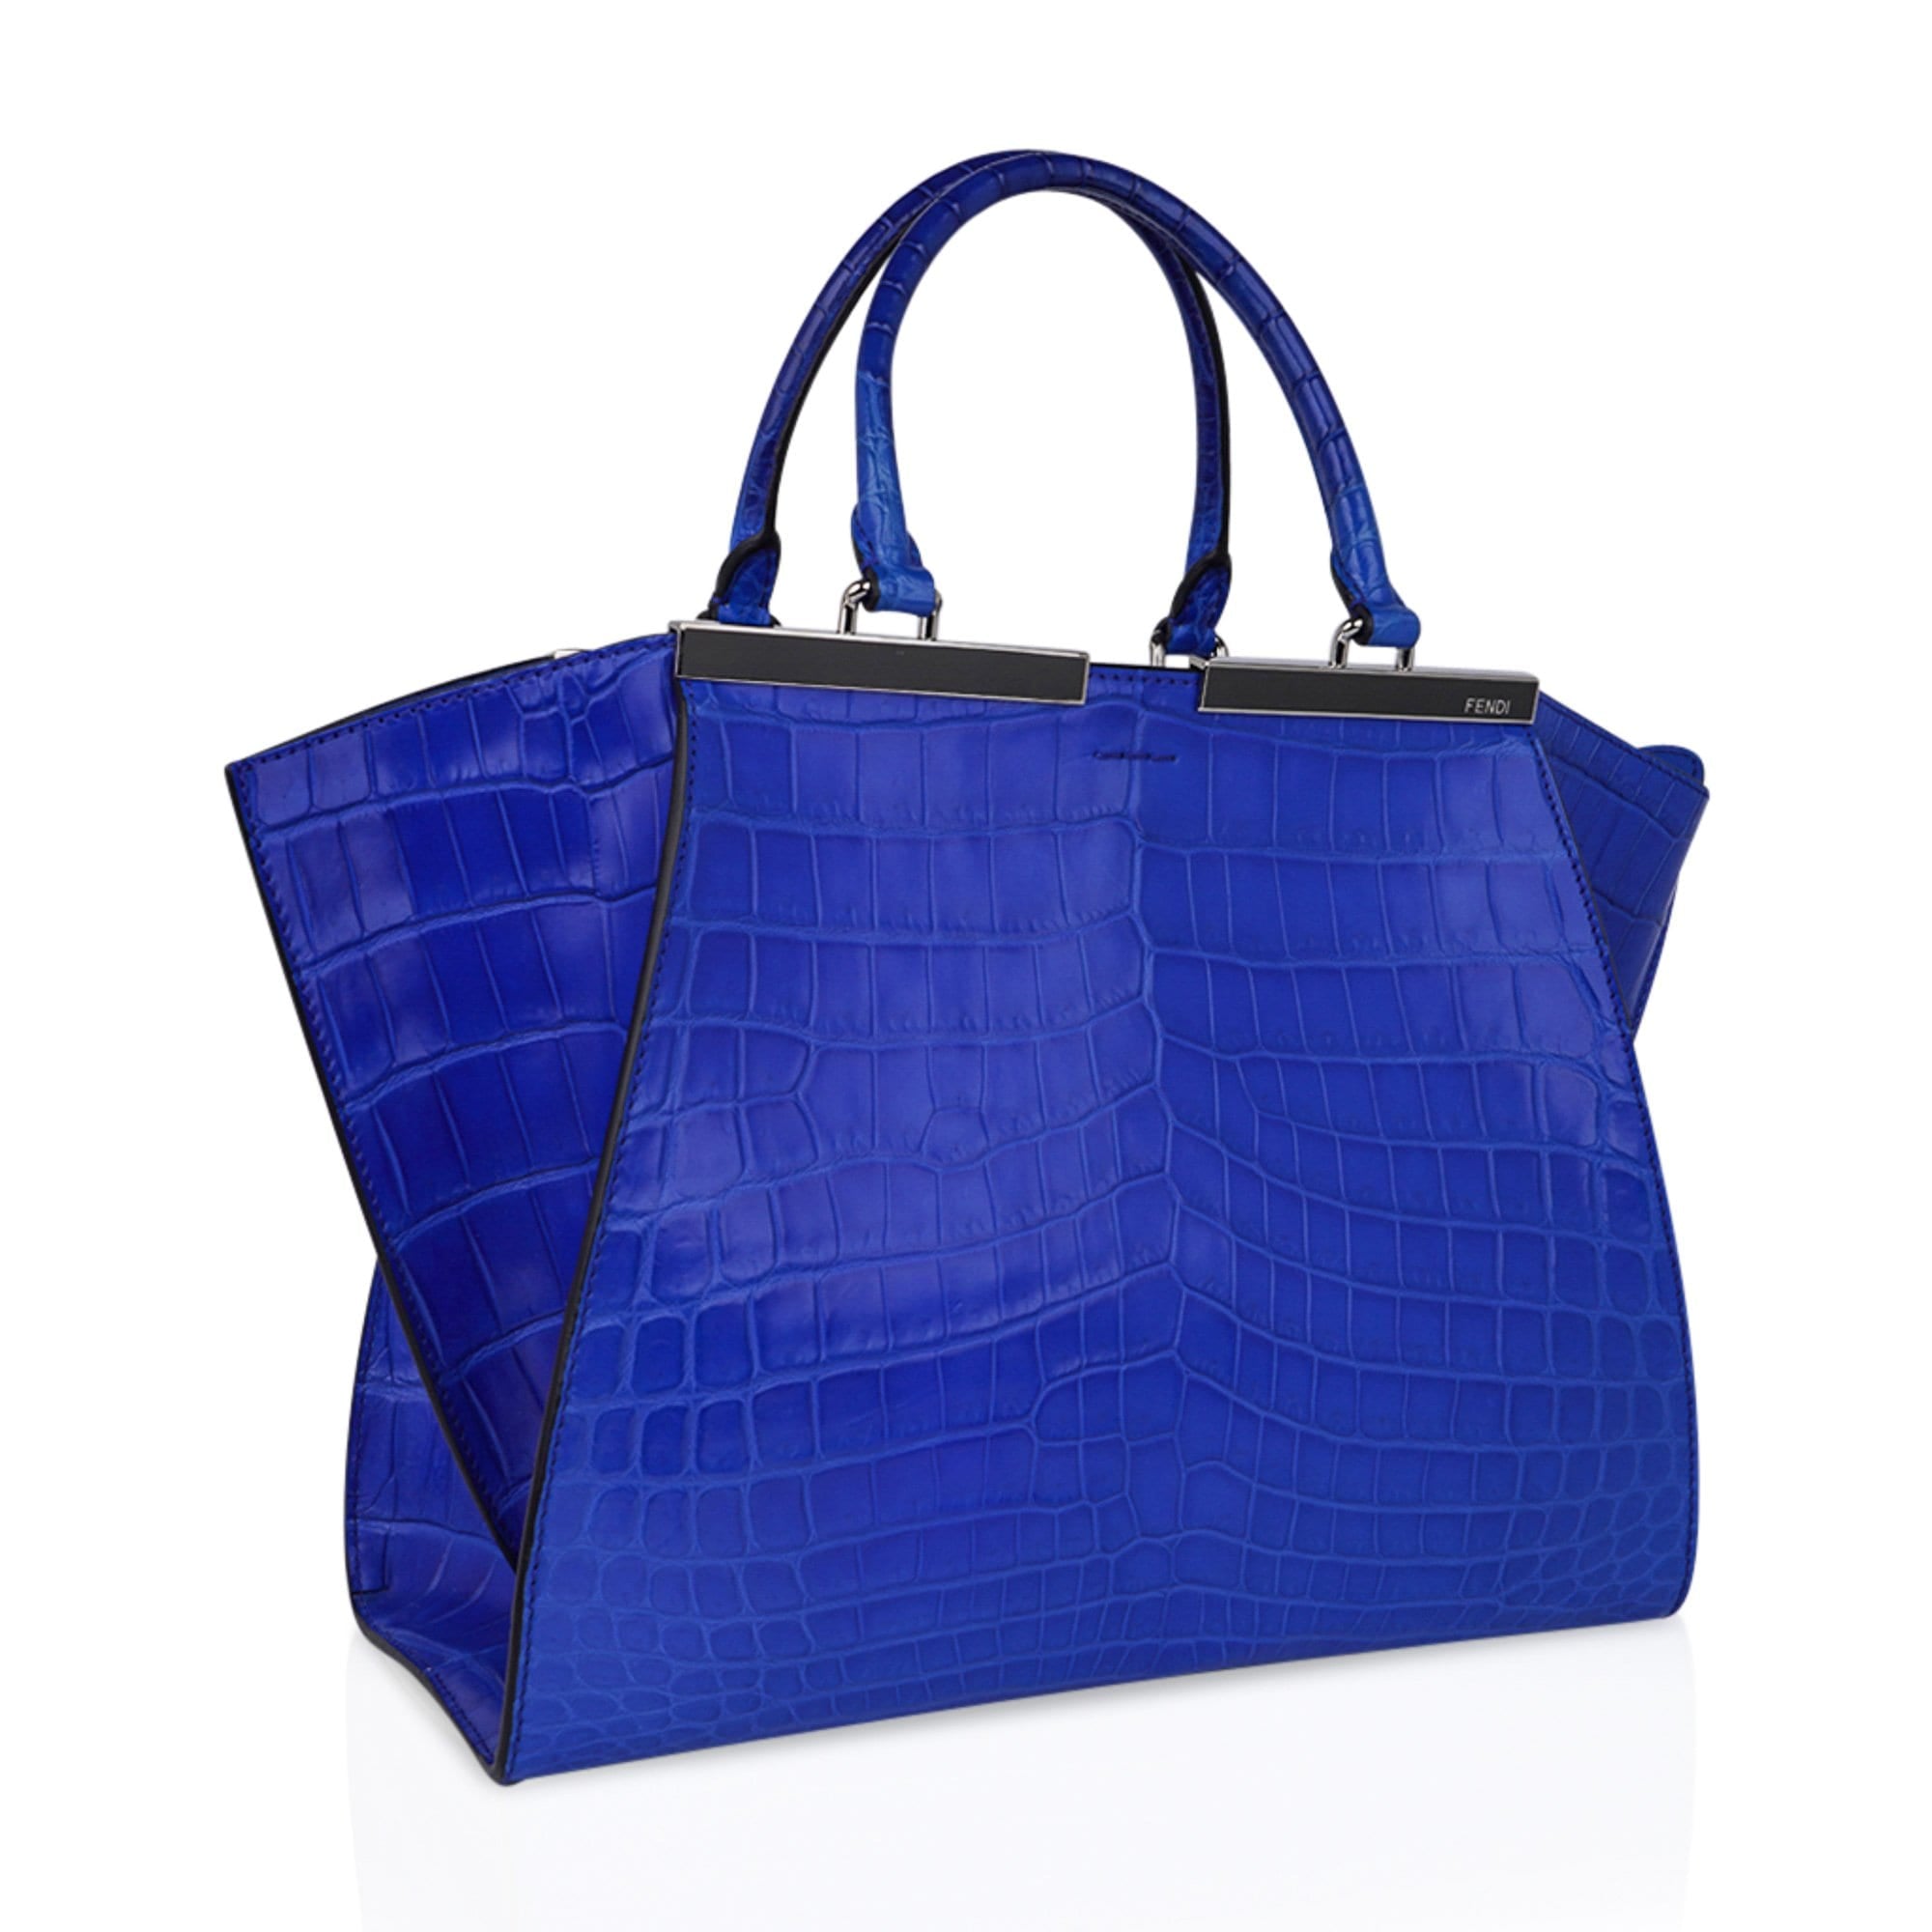 Bright Blue Leather Box Handbag